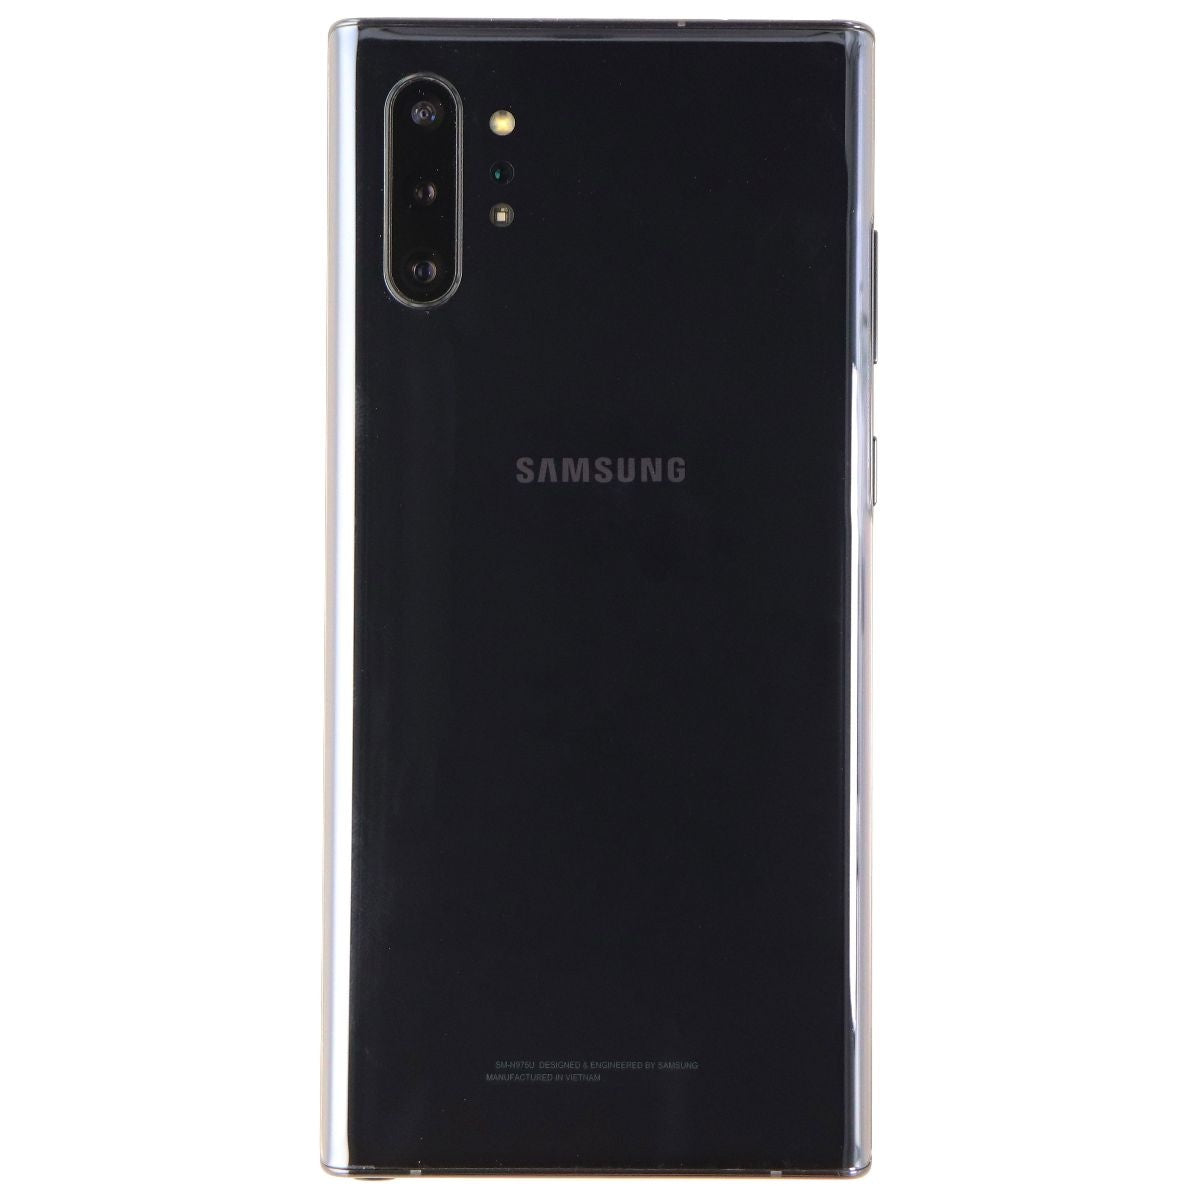 Samsung Galaxy Note10+ (6.8-inch) SM-N975U1 (UNLOCKED) - 512GB / Aura Black Cell Phones & Smartphones Samsung    - Simple Cell Bulk Wholesale Pricing - USA Seller